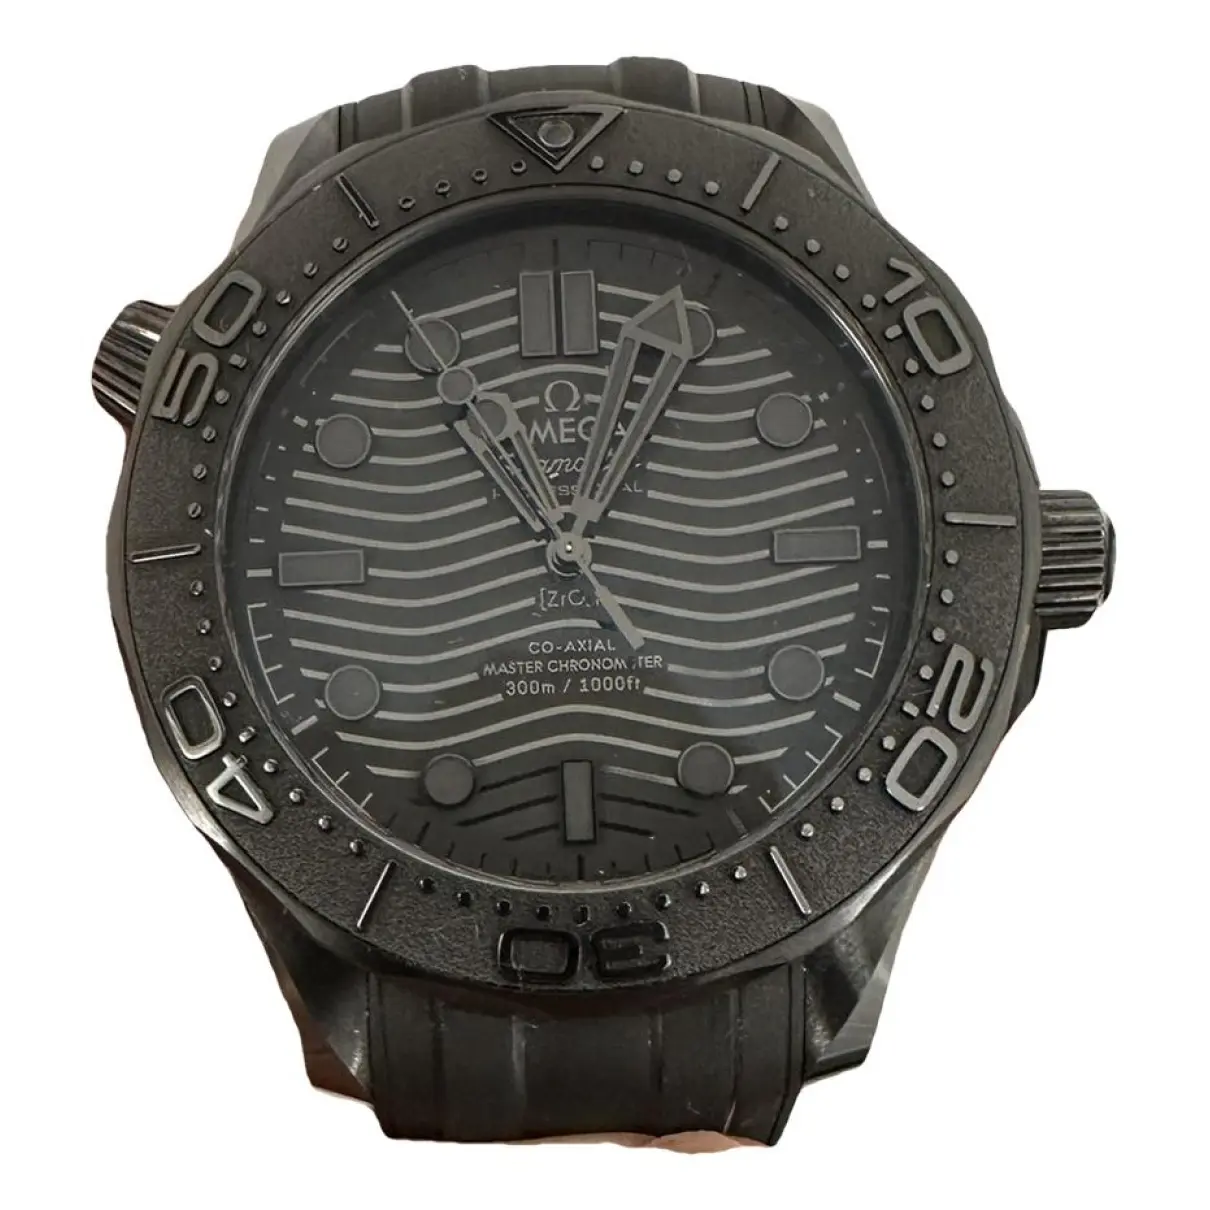 Seamaster 300 ceramic watch